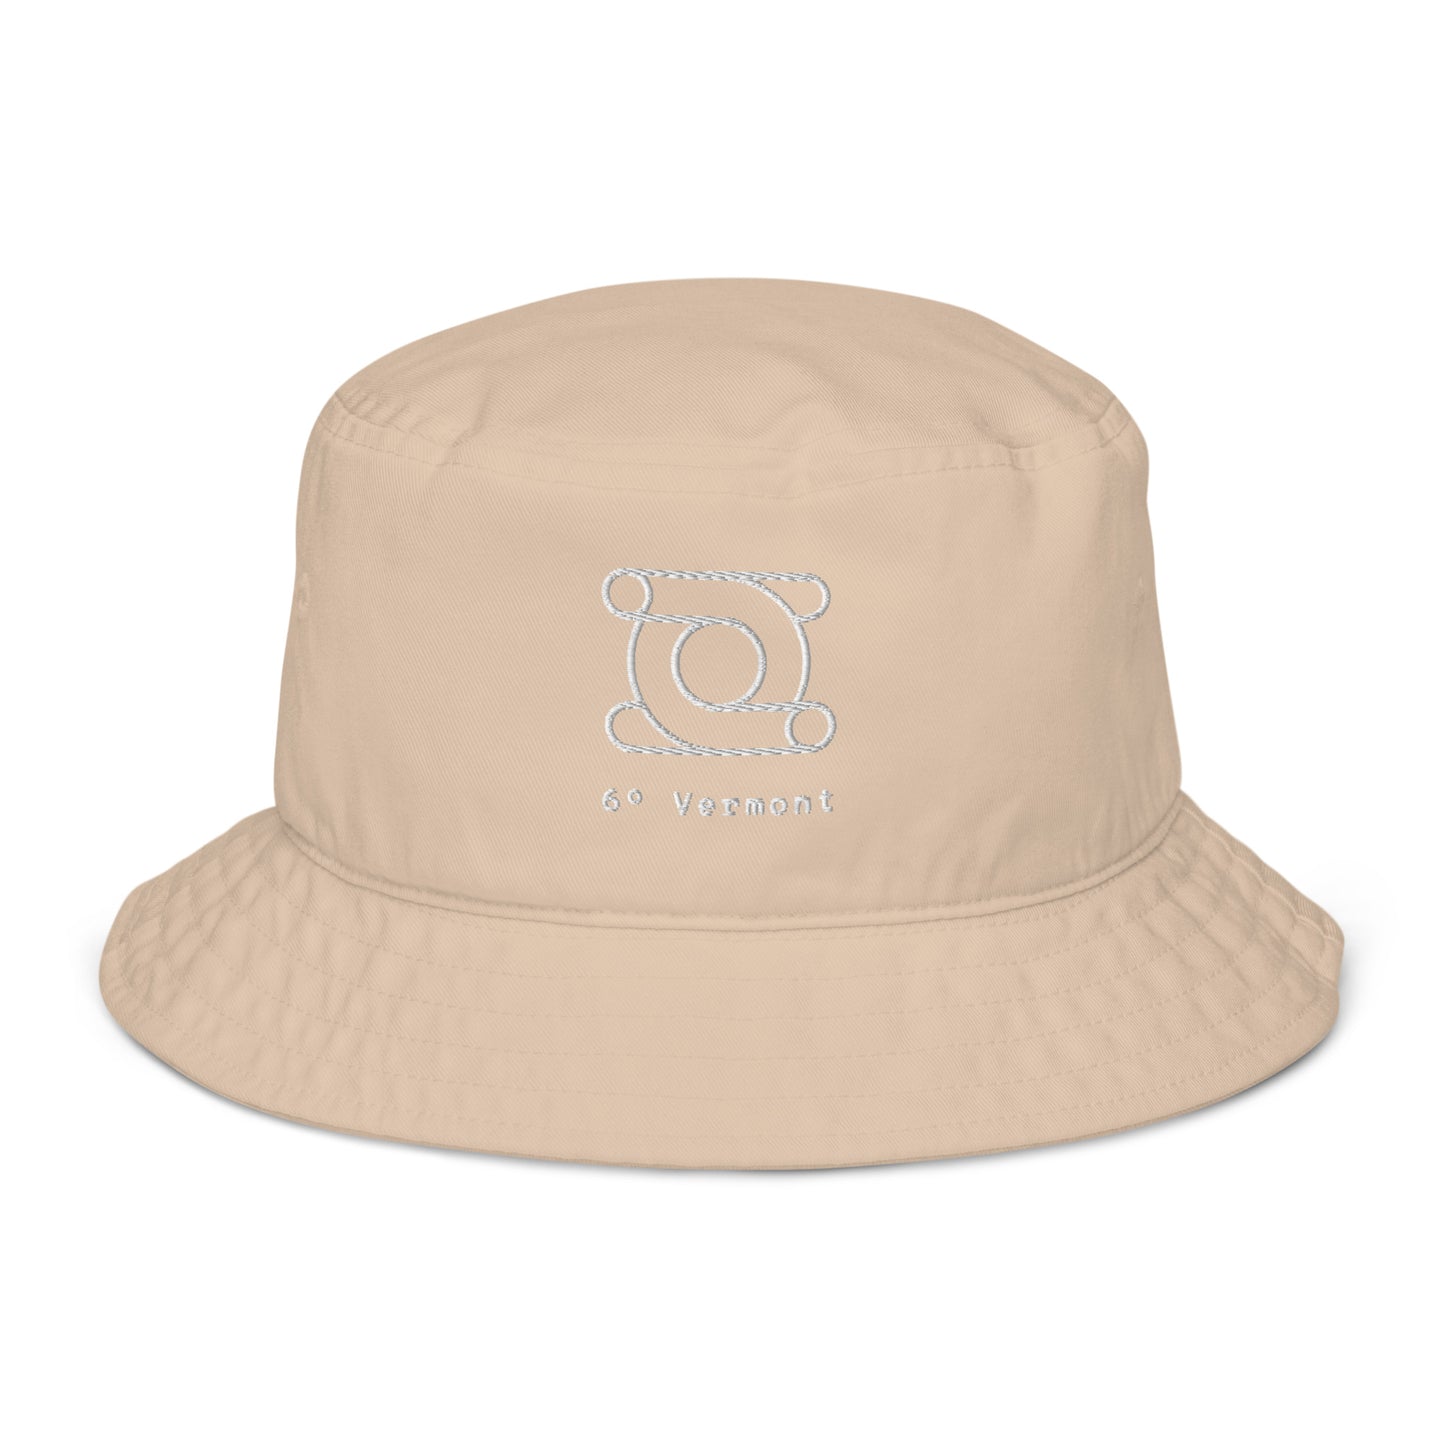 6° Vermont Organic bucket hat